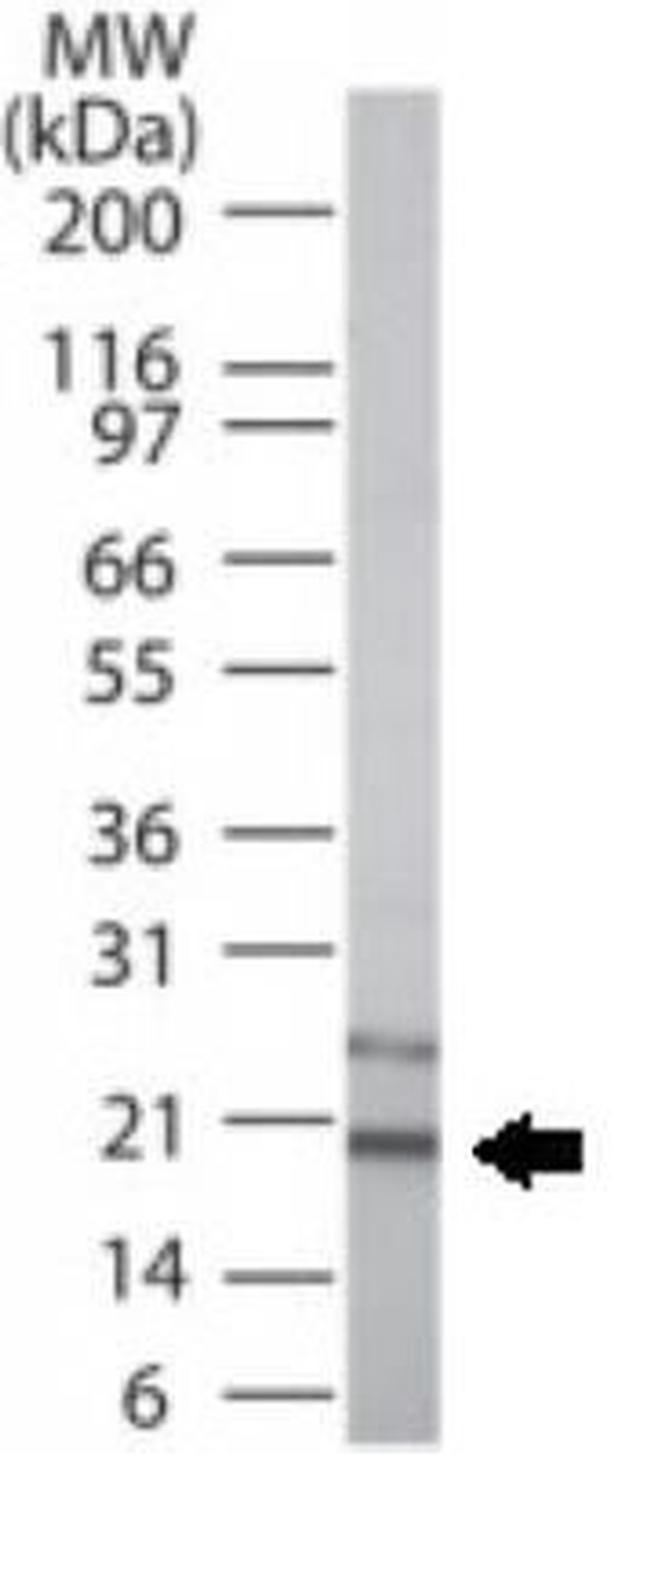 DcTRAILR1 Antibody in Western Blot (WB)